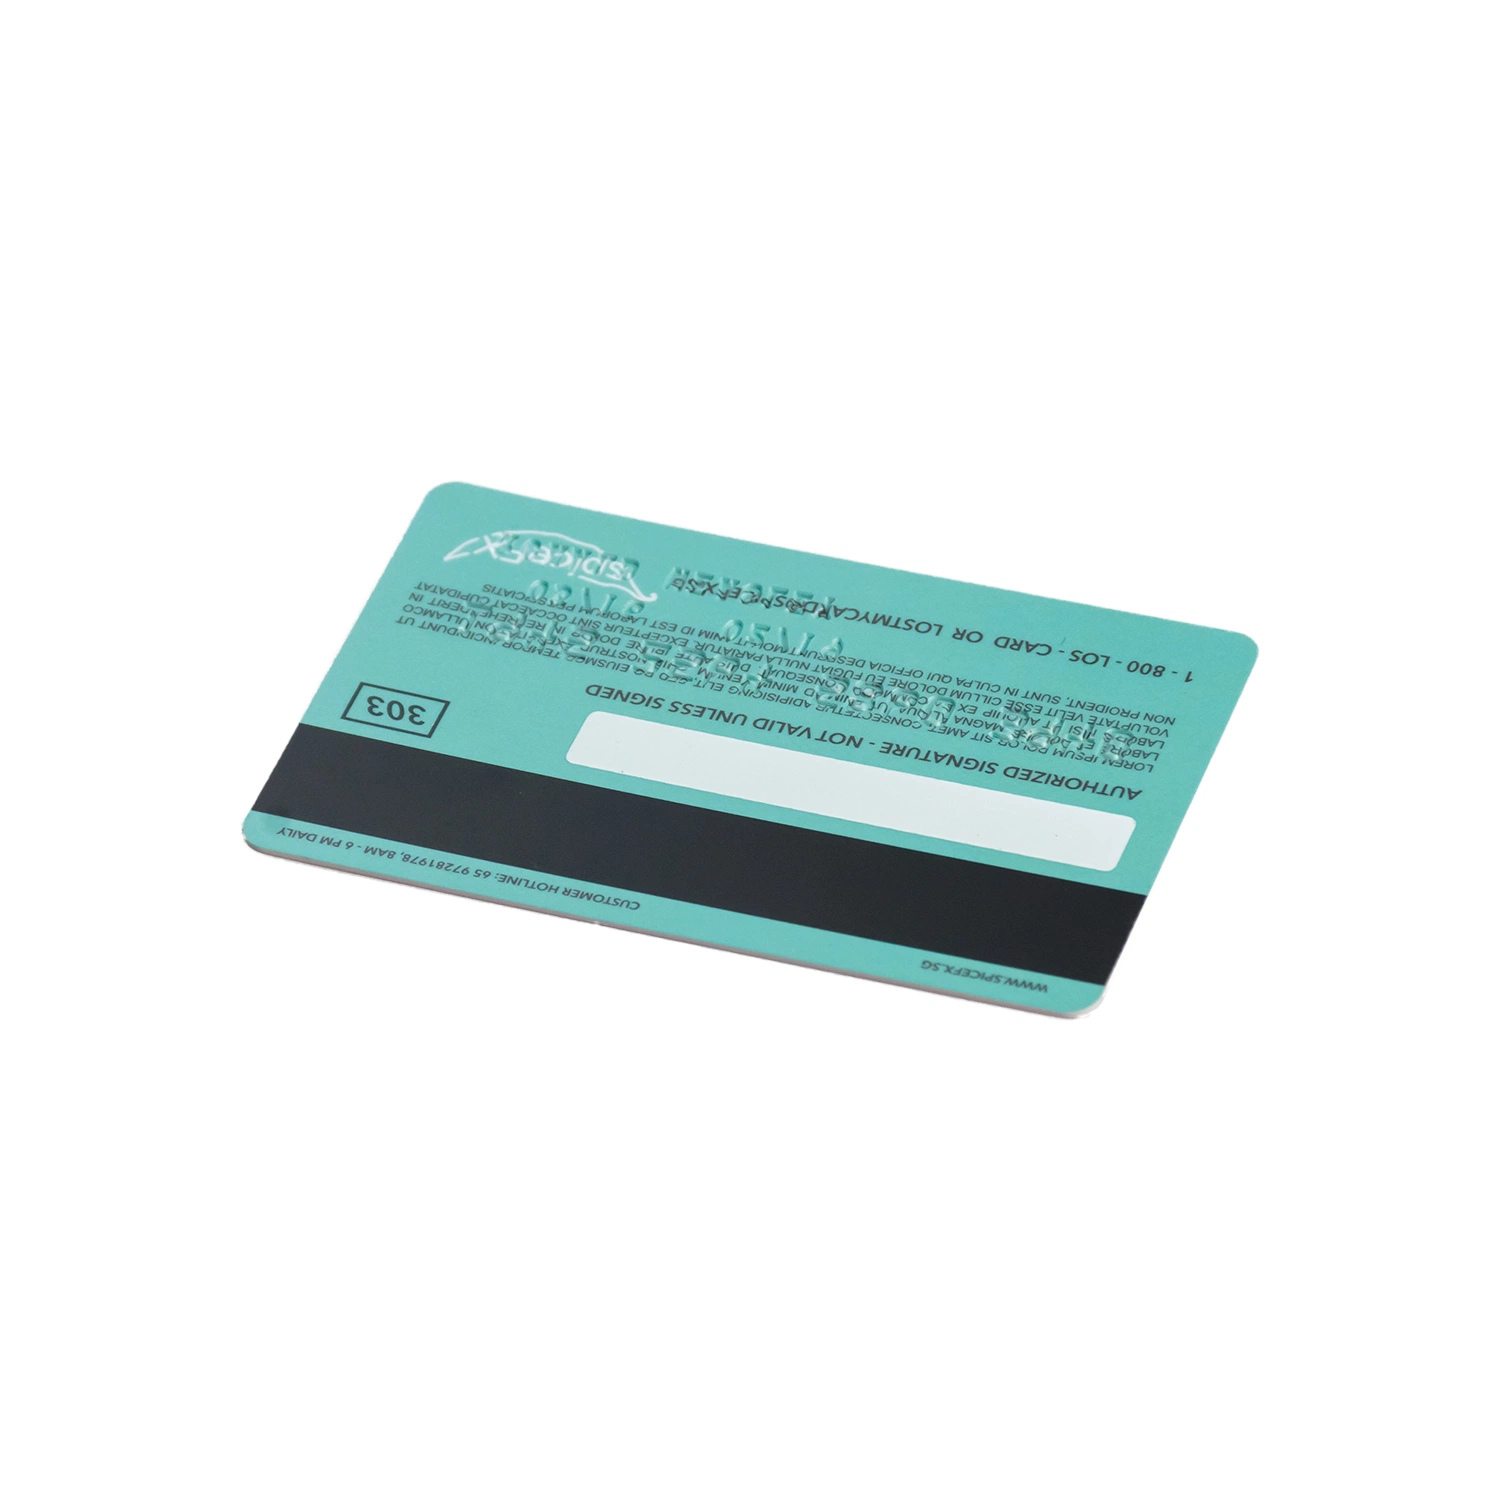 Full Color Printing Hotel Door Key Card Saflok Magnetic Stripe Card